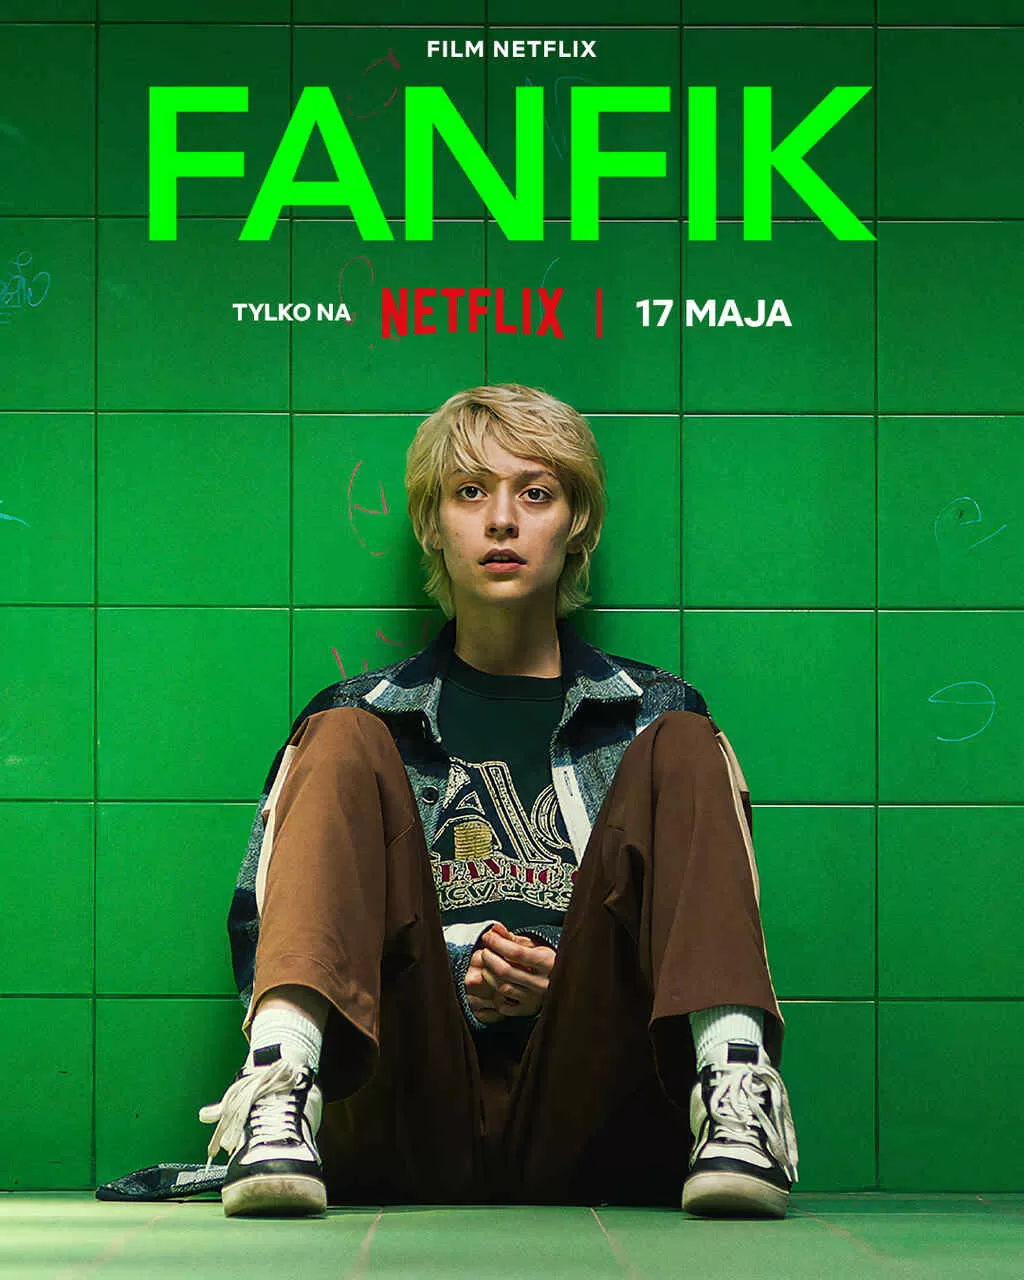 Fanfic (2023) แฟนฟิค